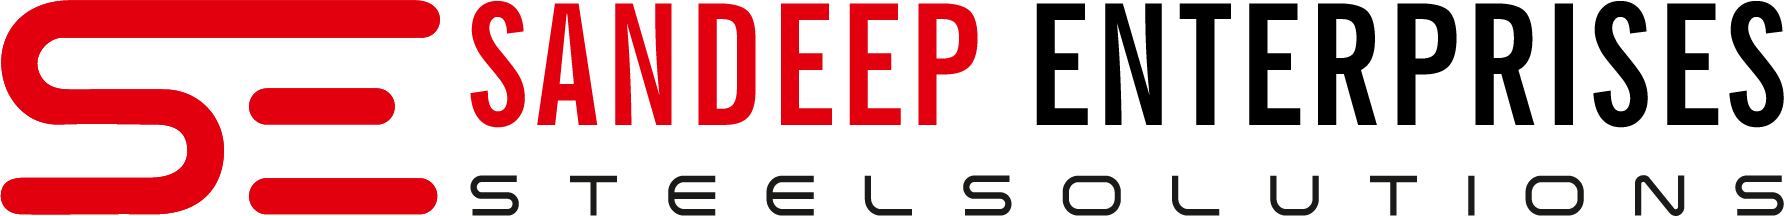 sandeep-enterprises-section-weight-logo